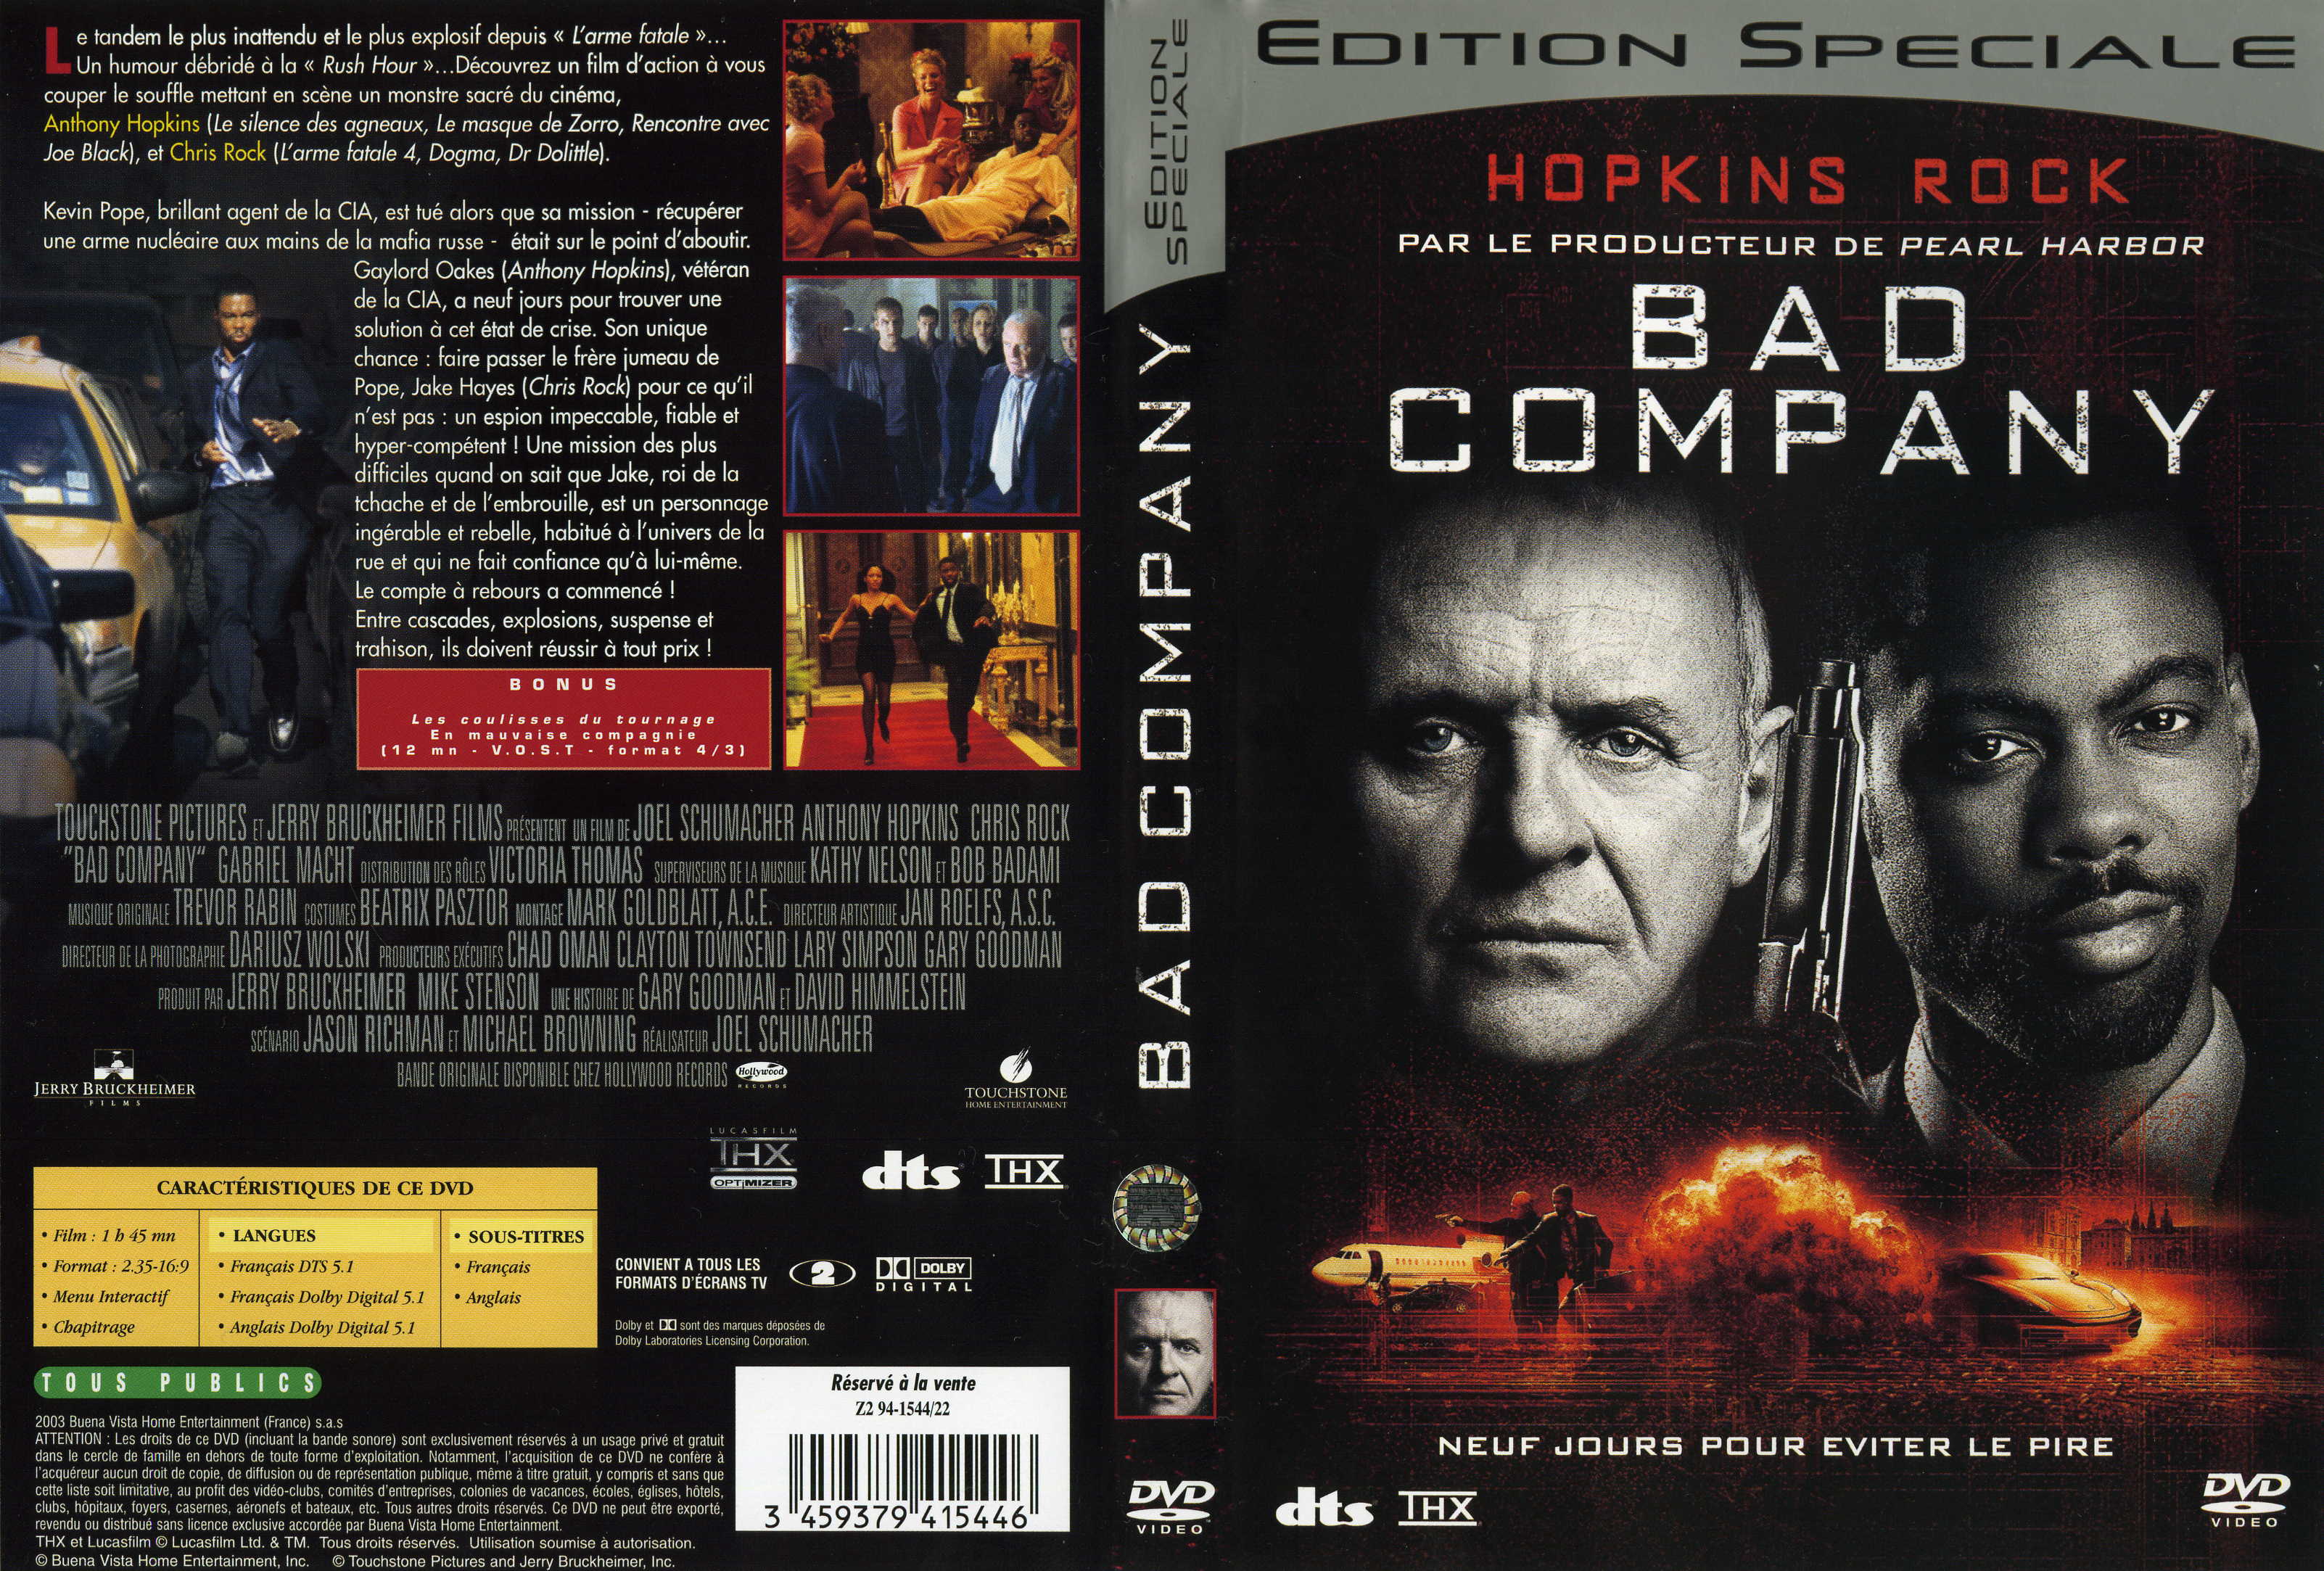 Jaquette DVD Bad company v2